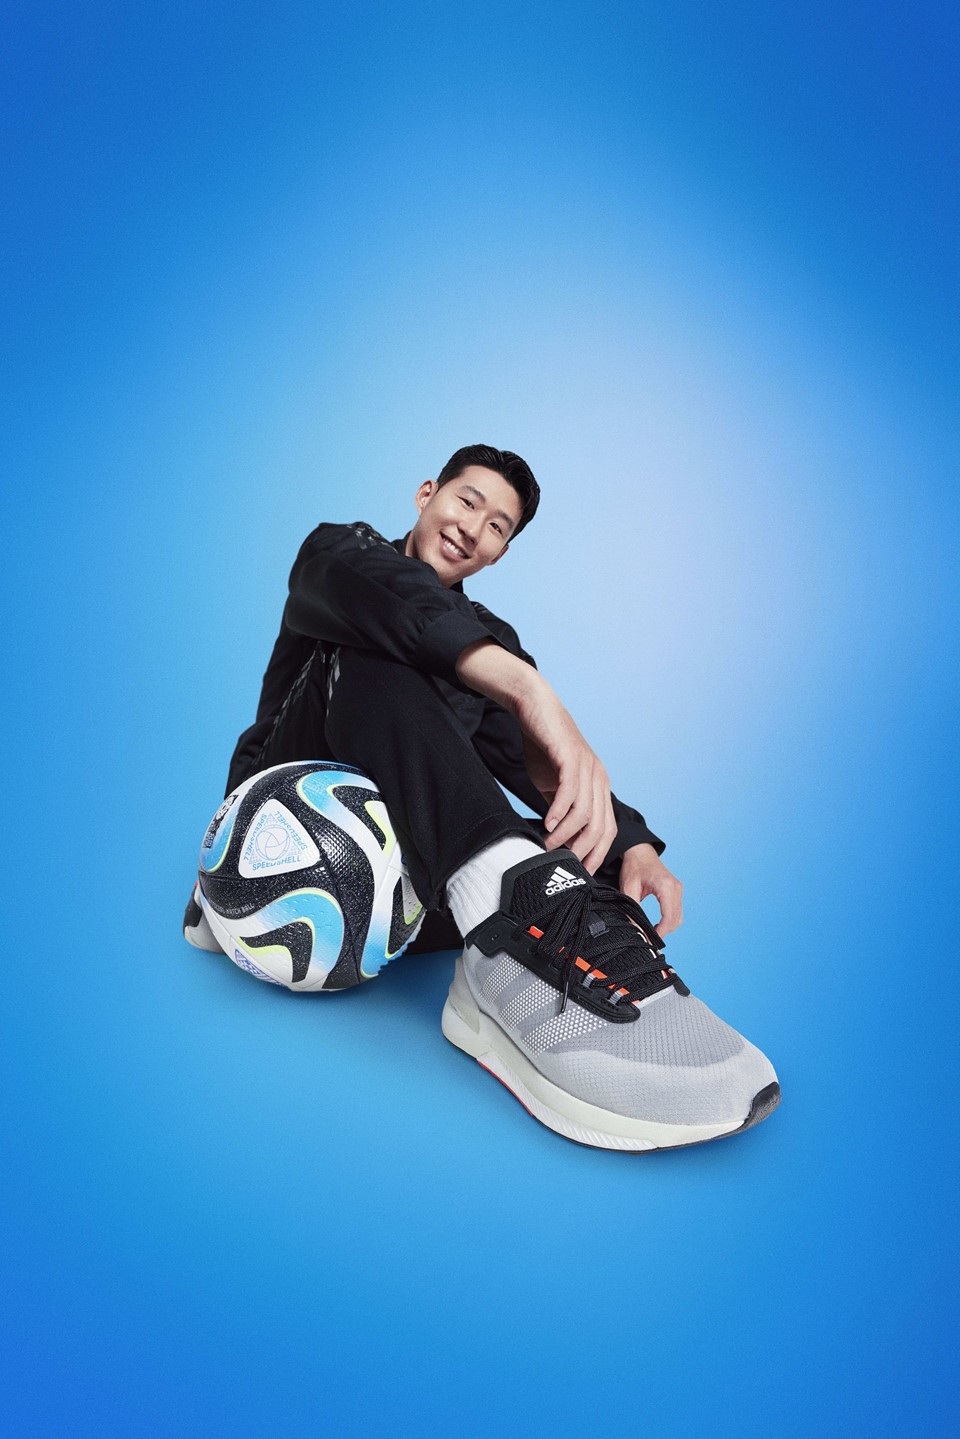 Son Heung-min Tottenham Hotspur Jersey – Jerseys and Sneakers